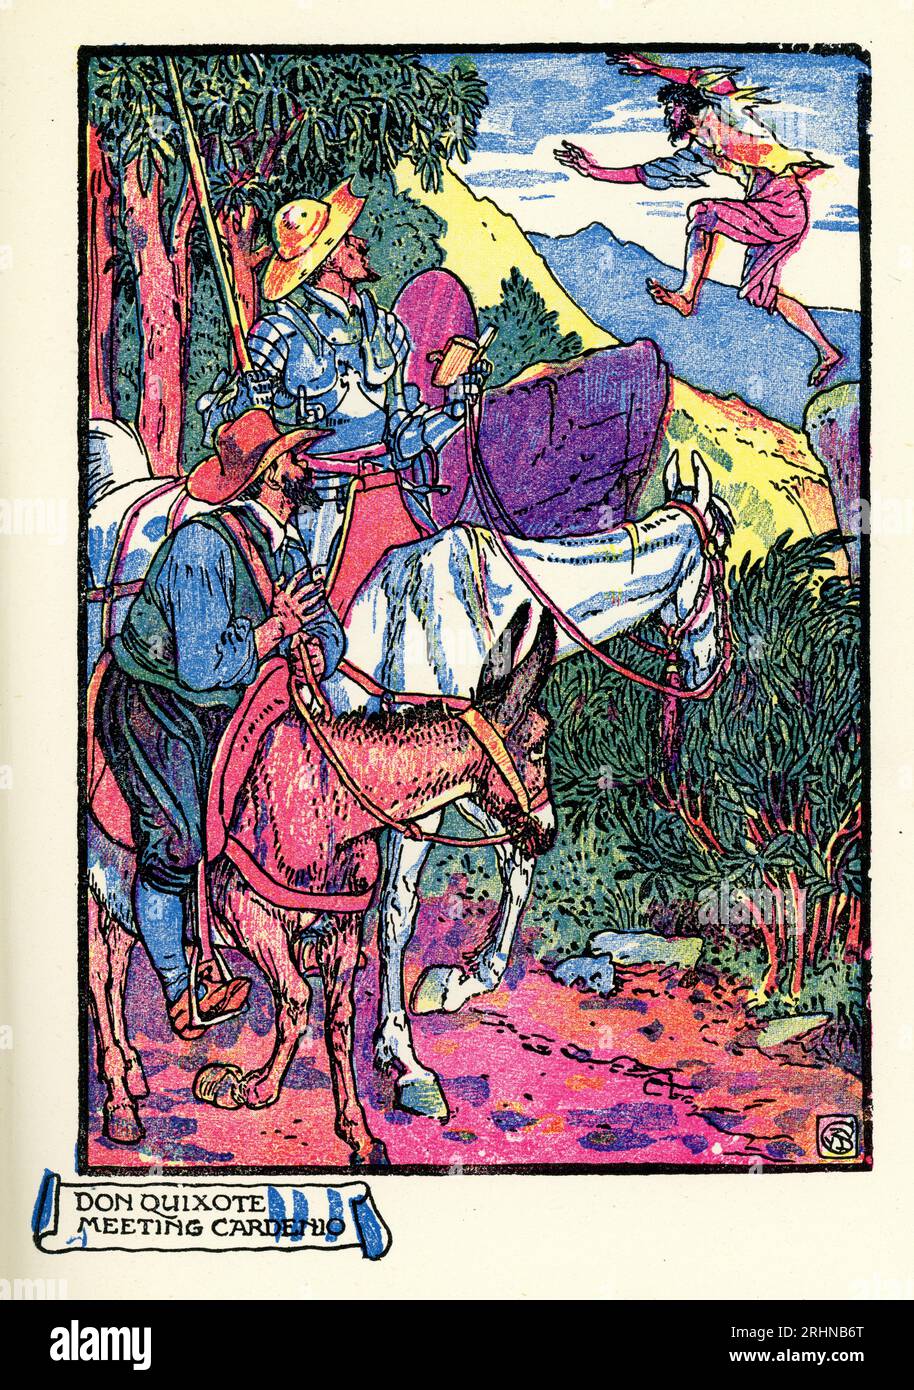 Don Quixote of la Mancha, meeting Cardenio, by Walter Crane, Don Quixote is a Spanish epic novel by Miguel de Cervantes. Stock Photo